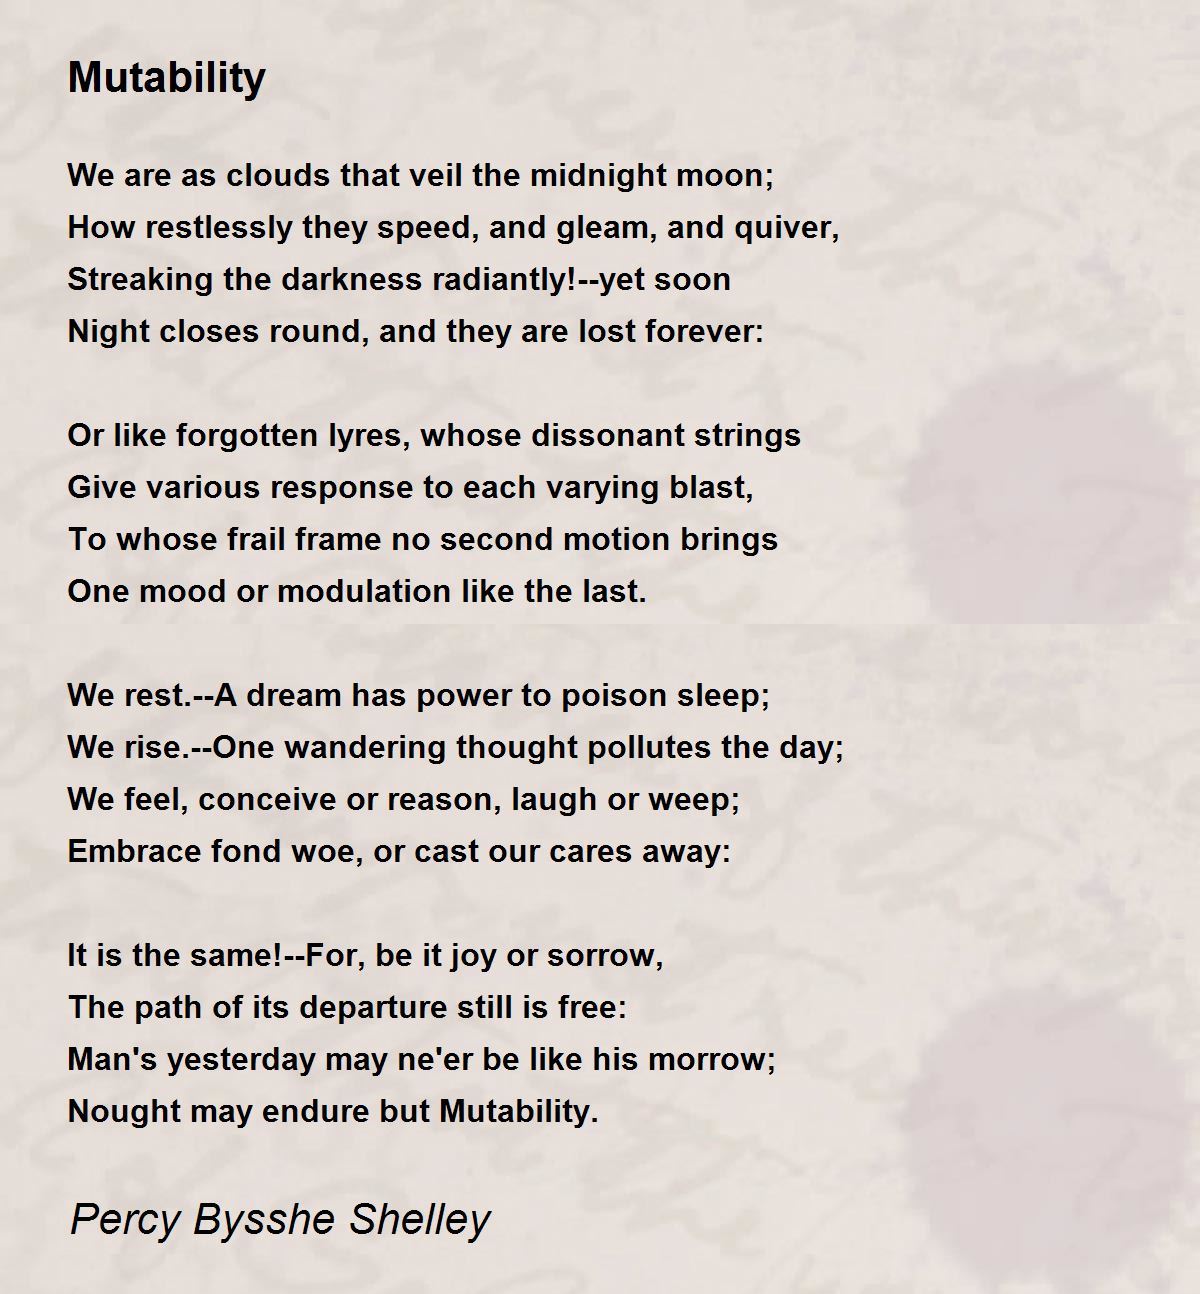 Mutability Poem by Percy Bysshe Shelley - Poem Hunter